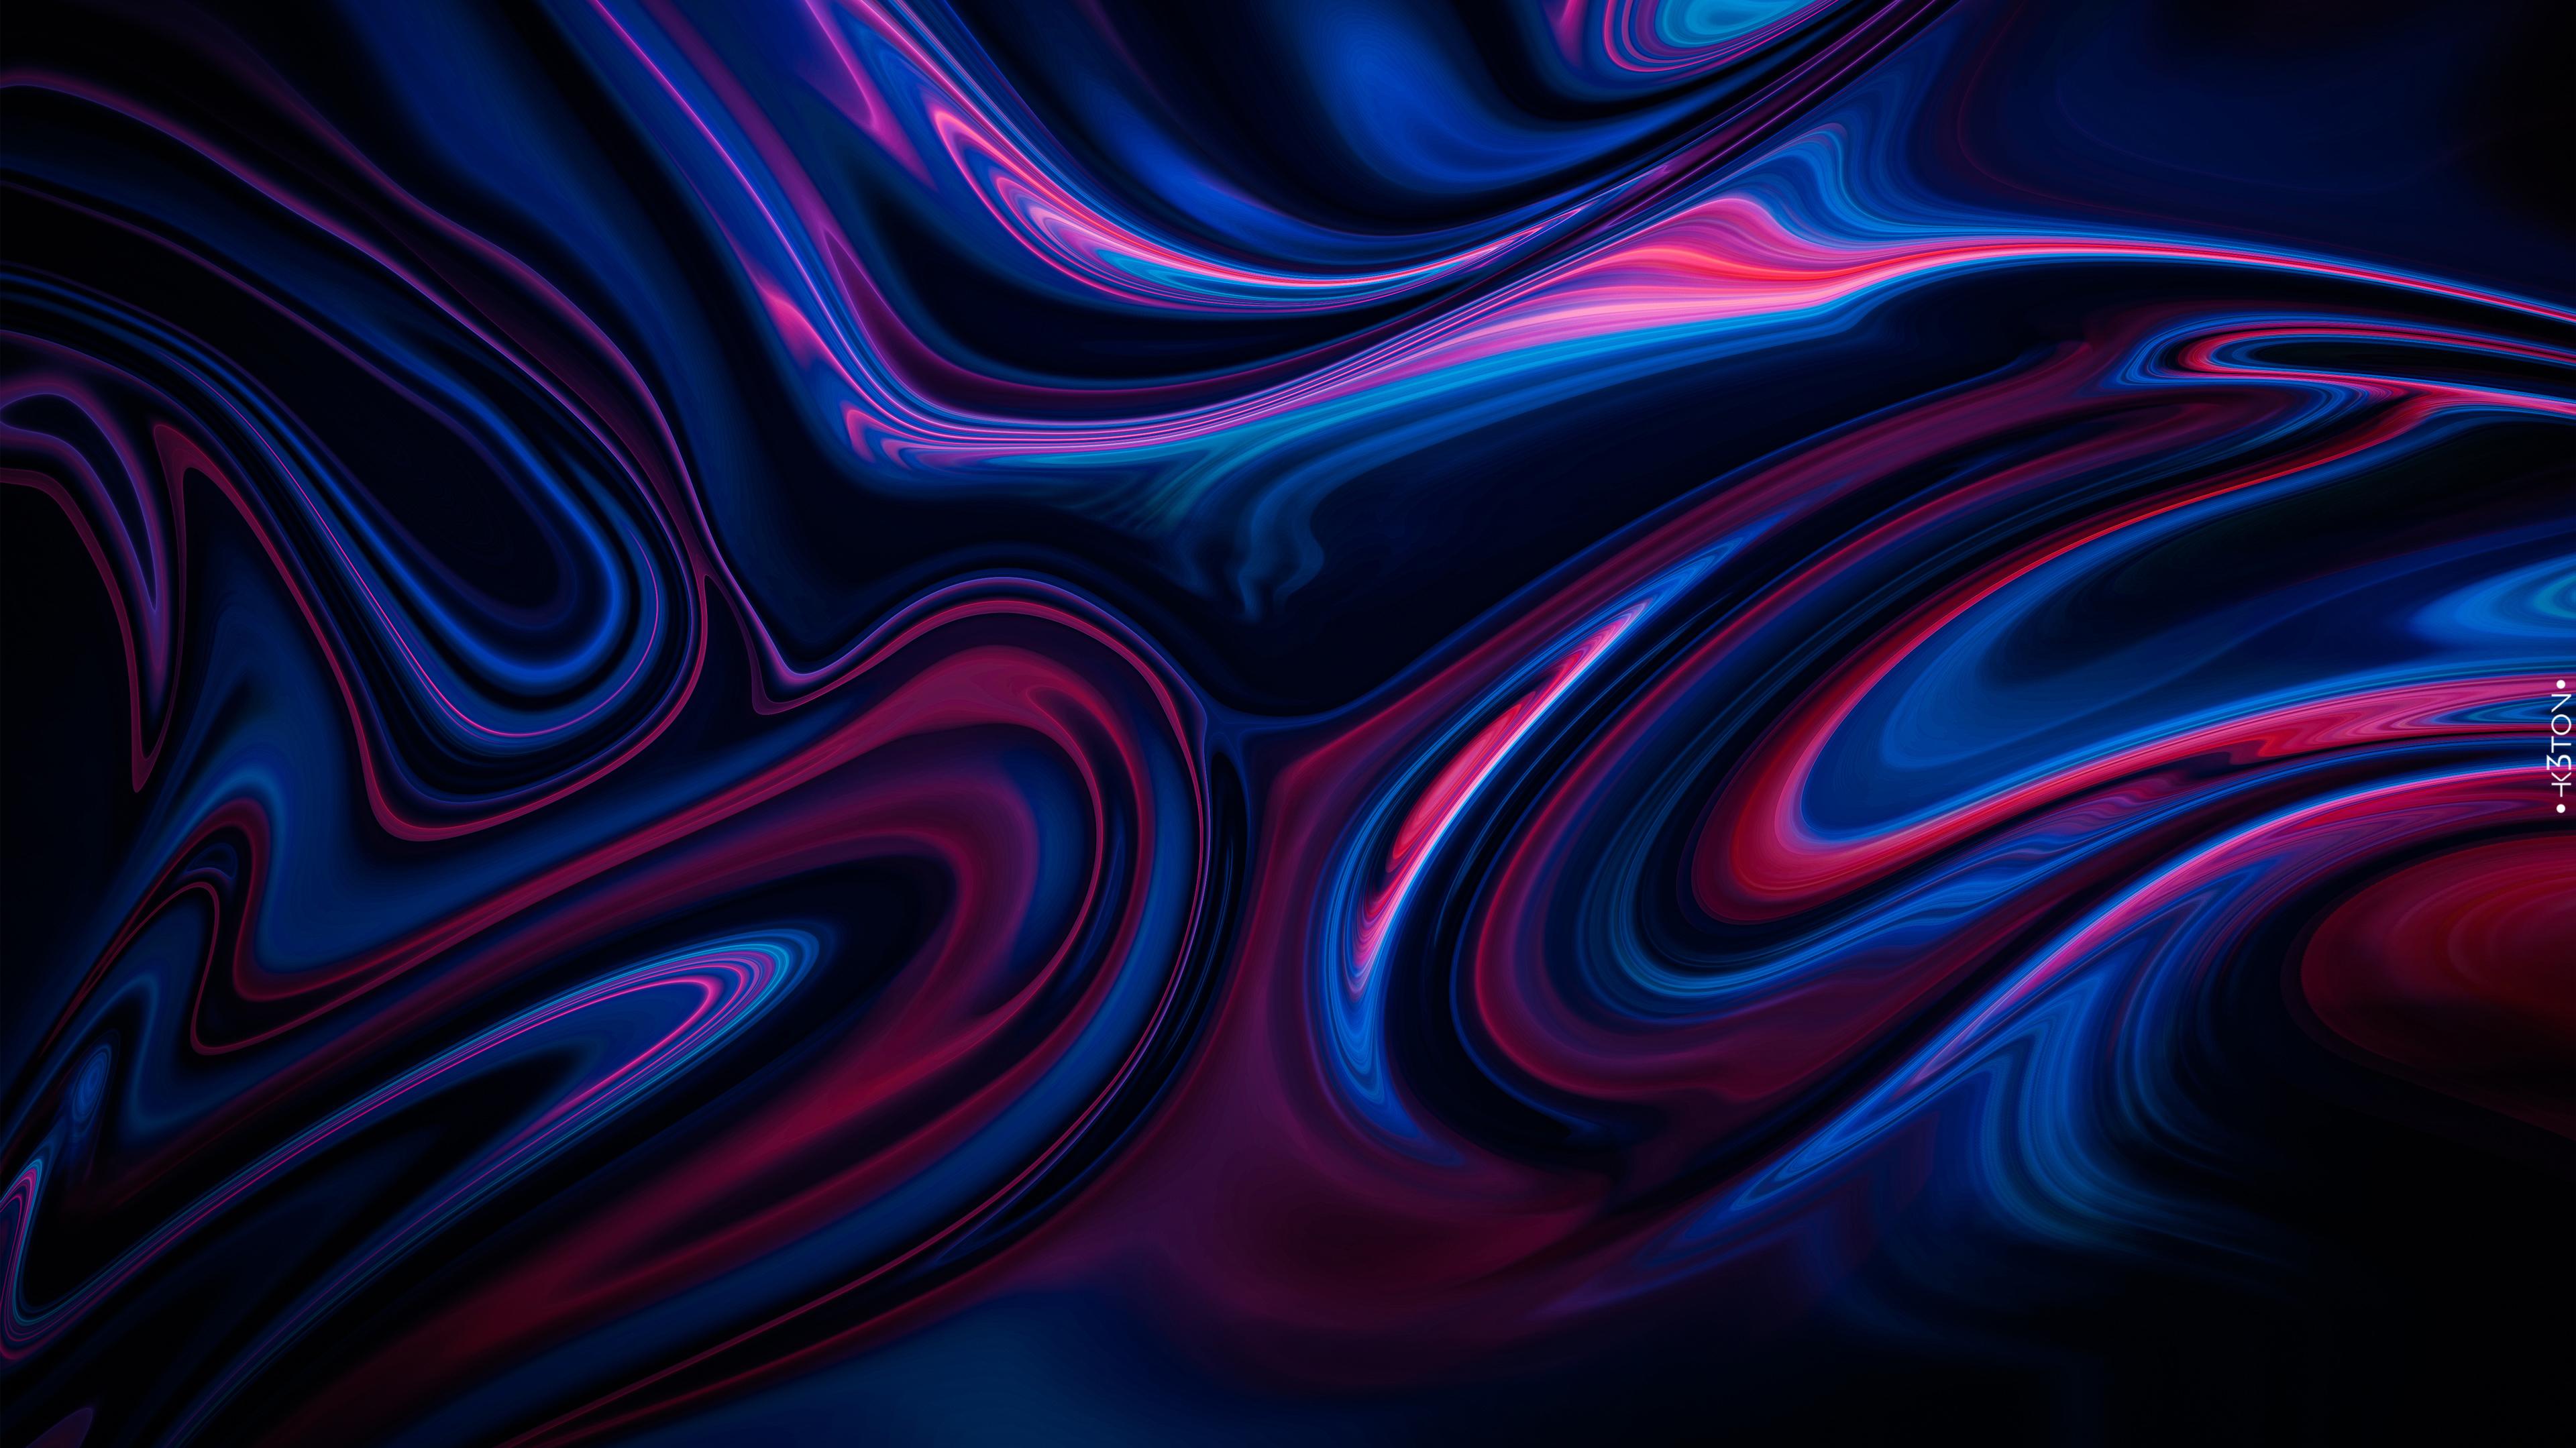 Abstract Wave 4k Ultra HD Wallpaper